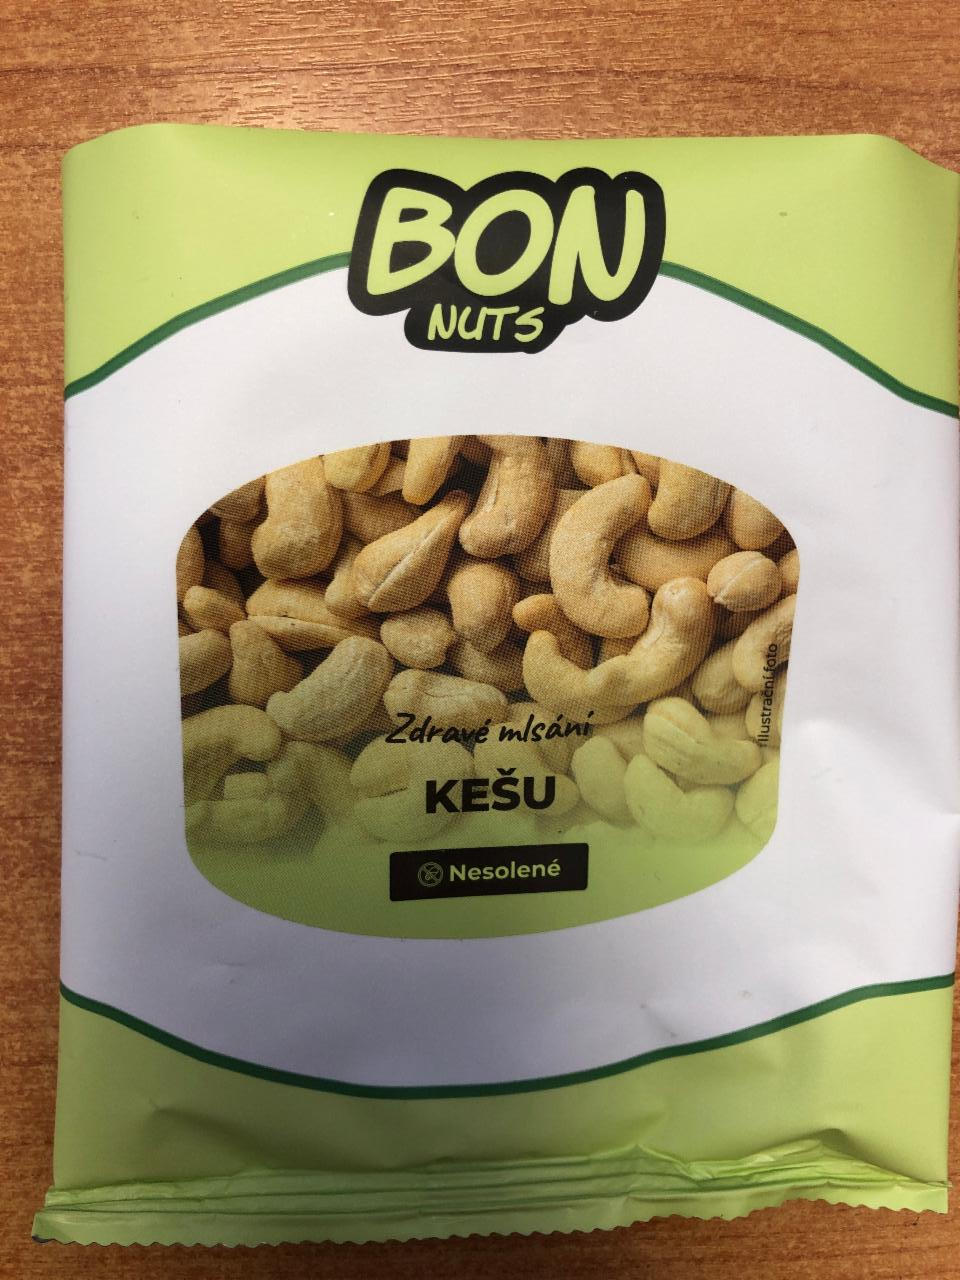 Fotografie - Kešu nesolené Bon nuts